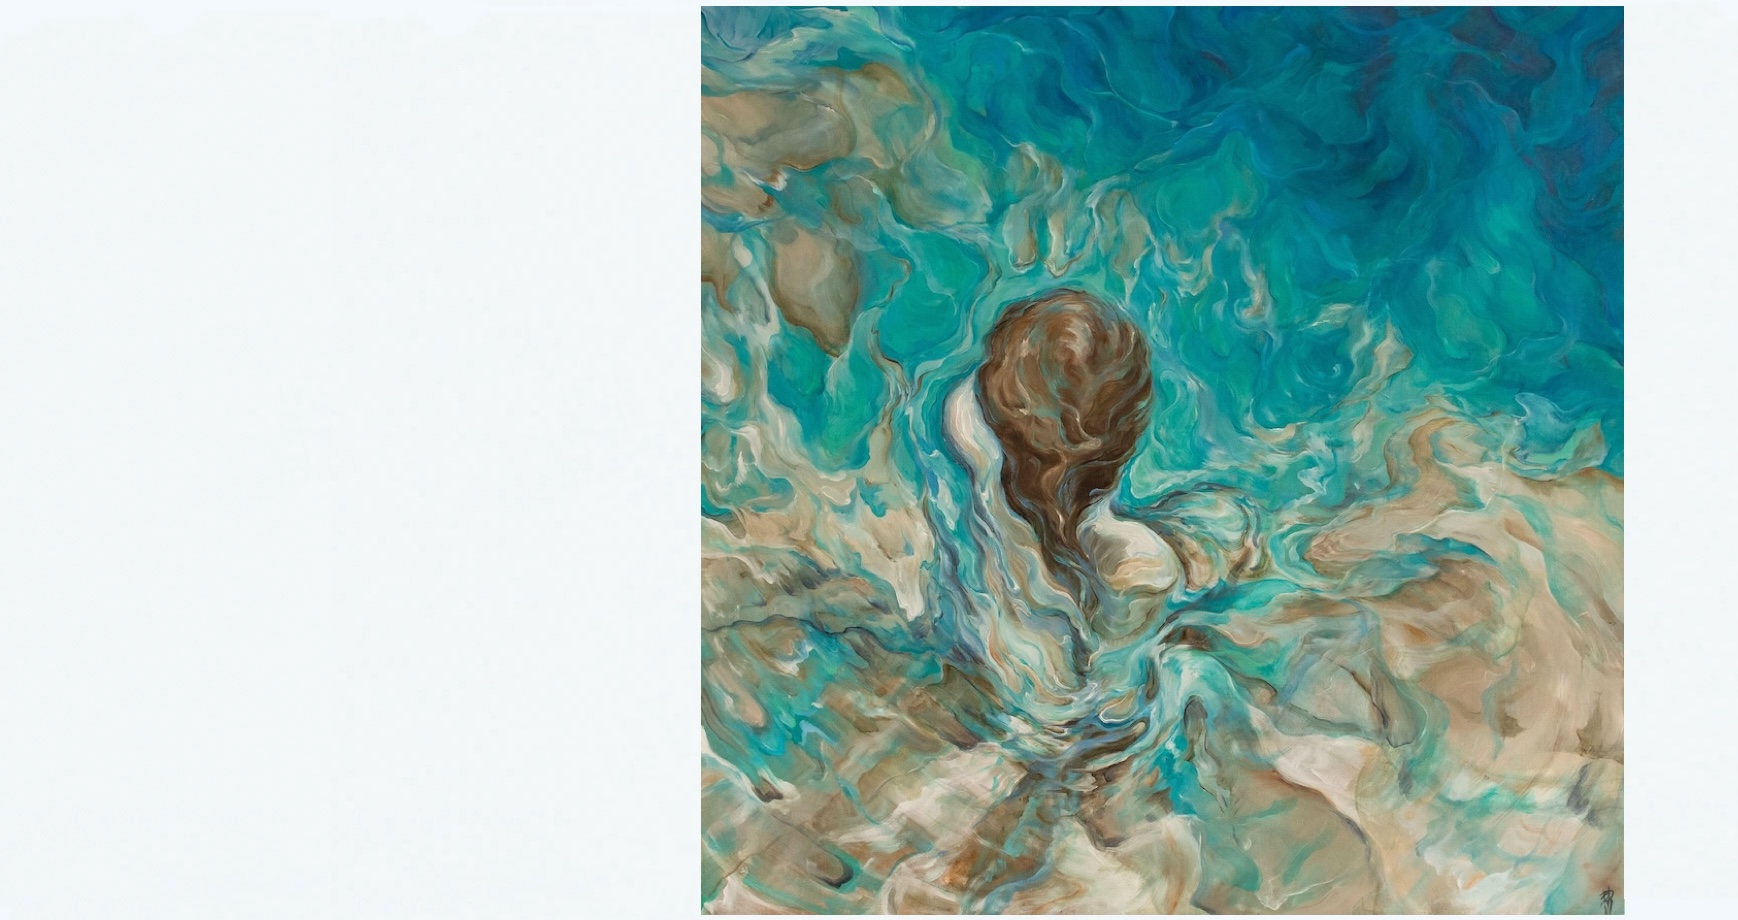 Rossella Rossi painter website Ocean Turquoise by Rossella Rossi